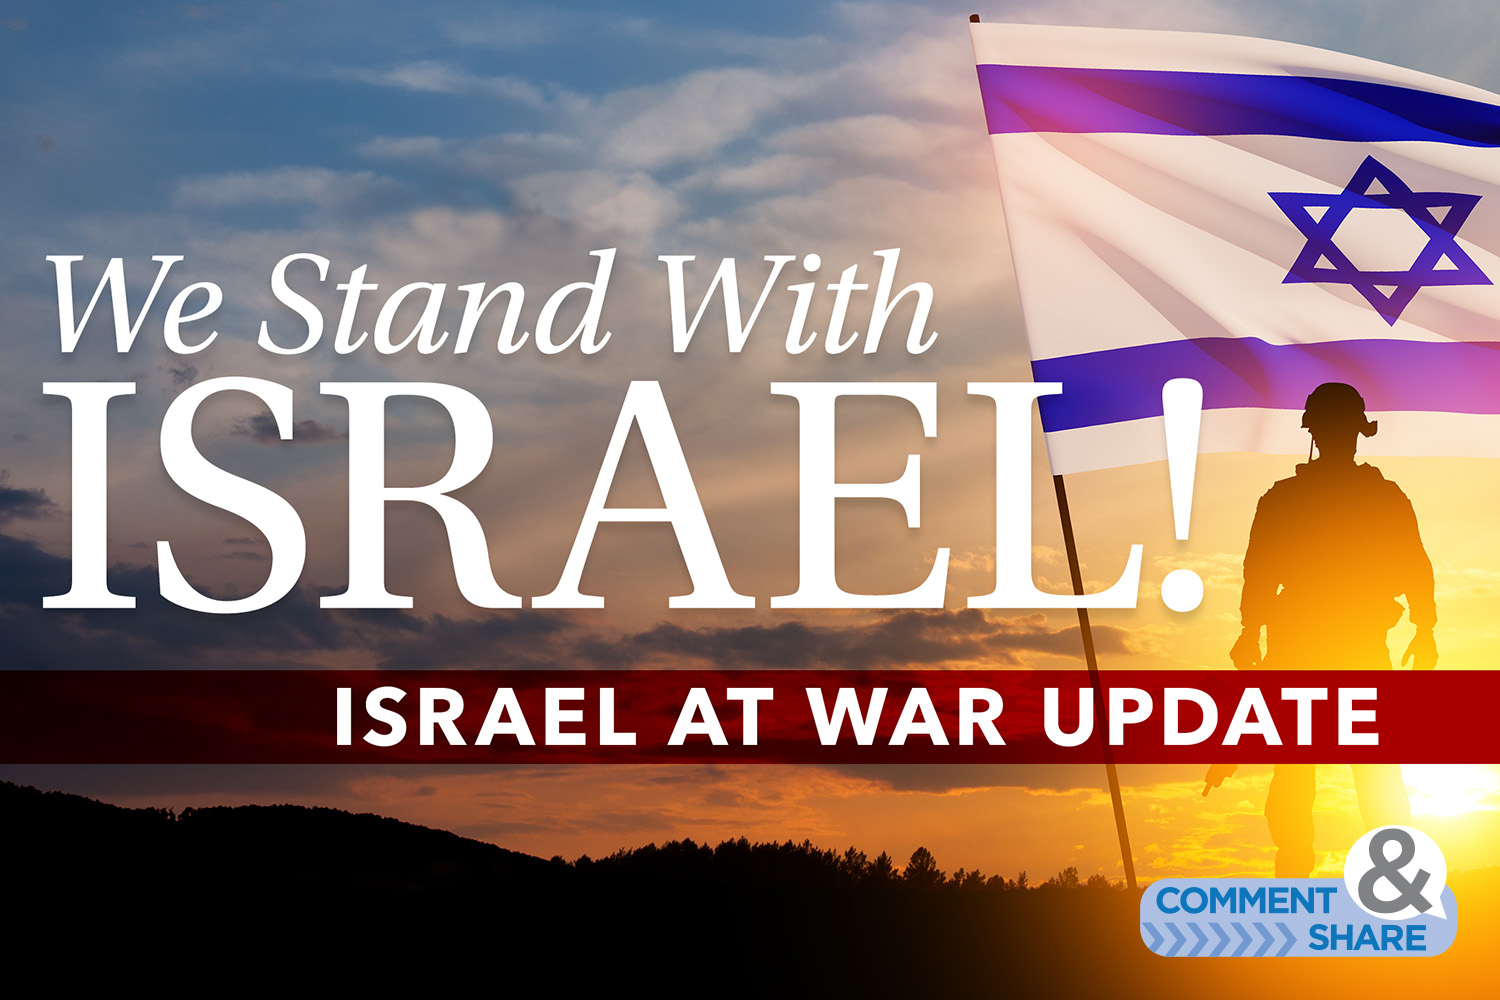 Israel at War Update